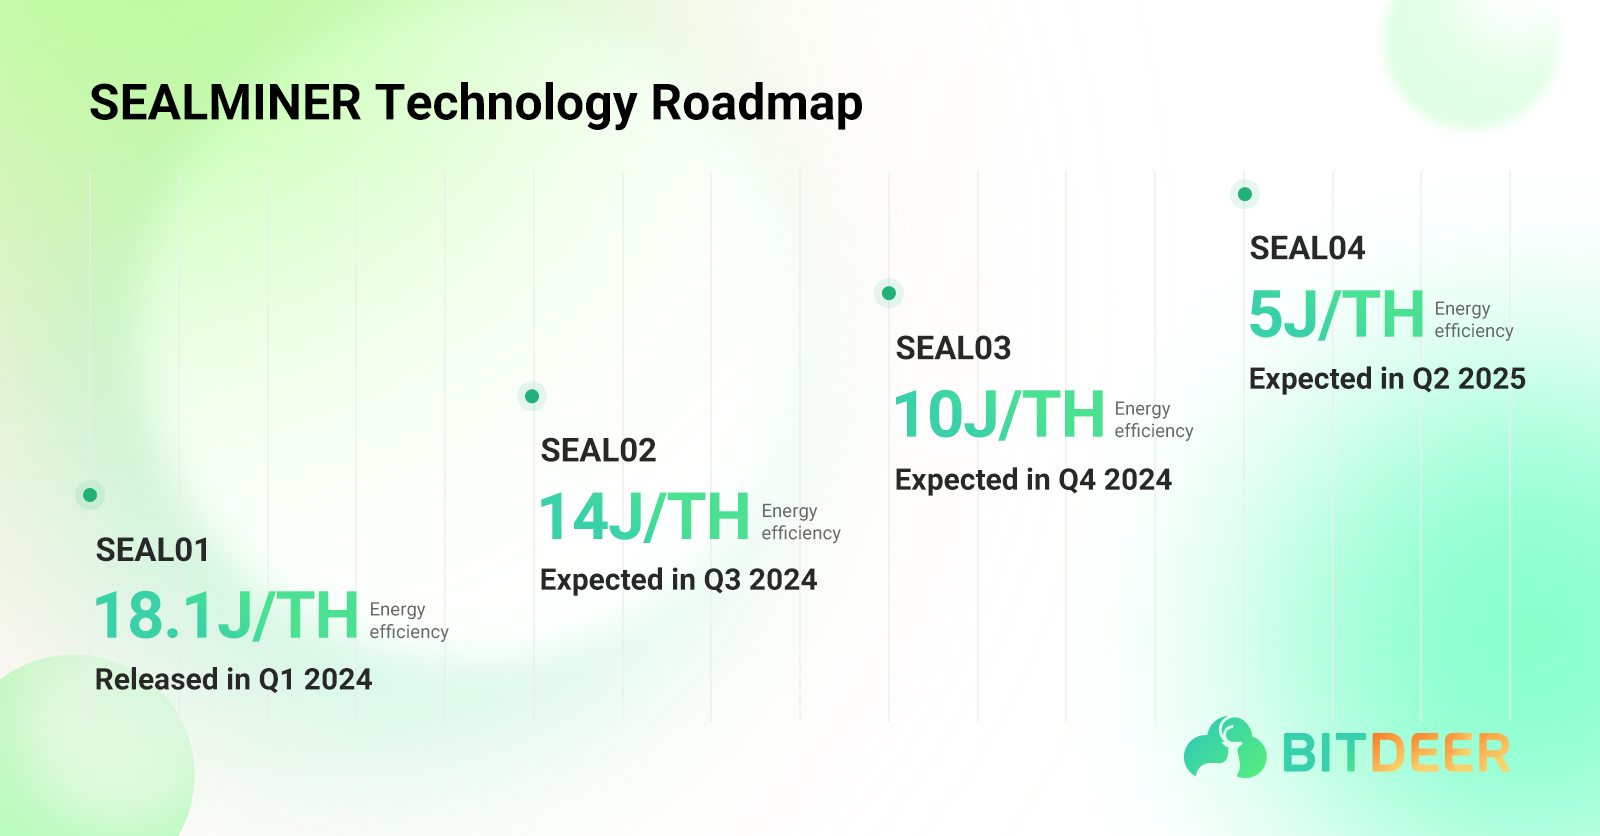 SEALMINER Technology Roadmap